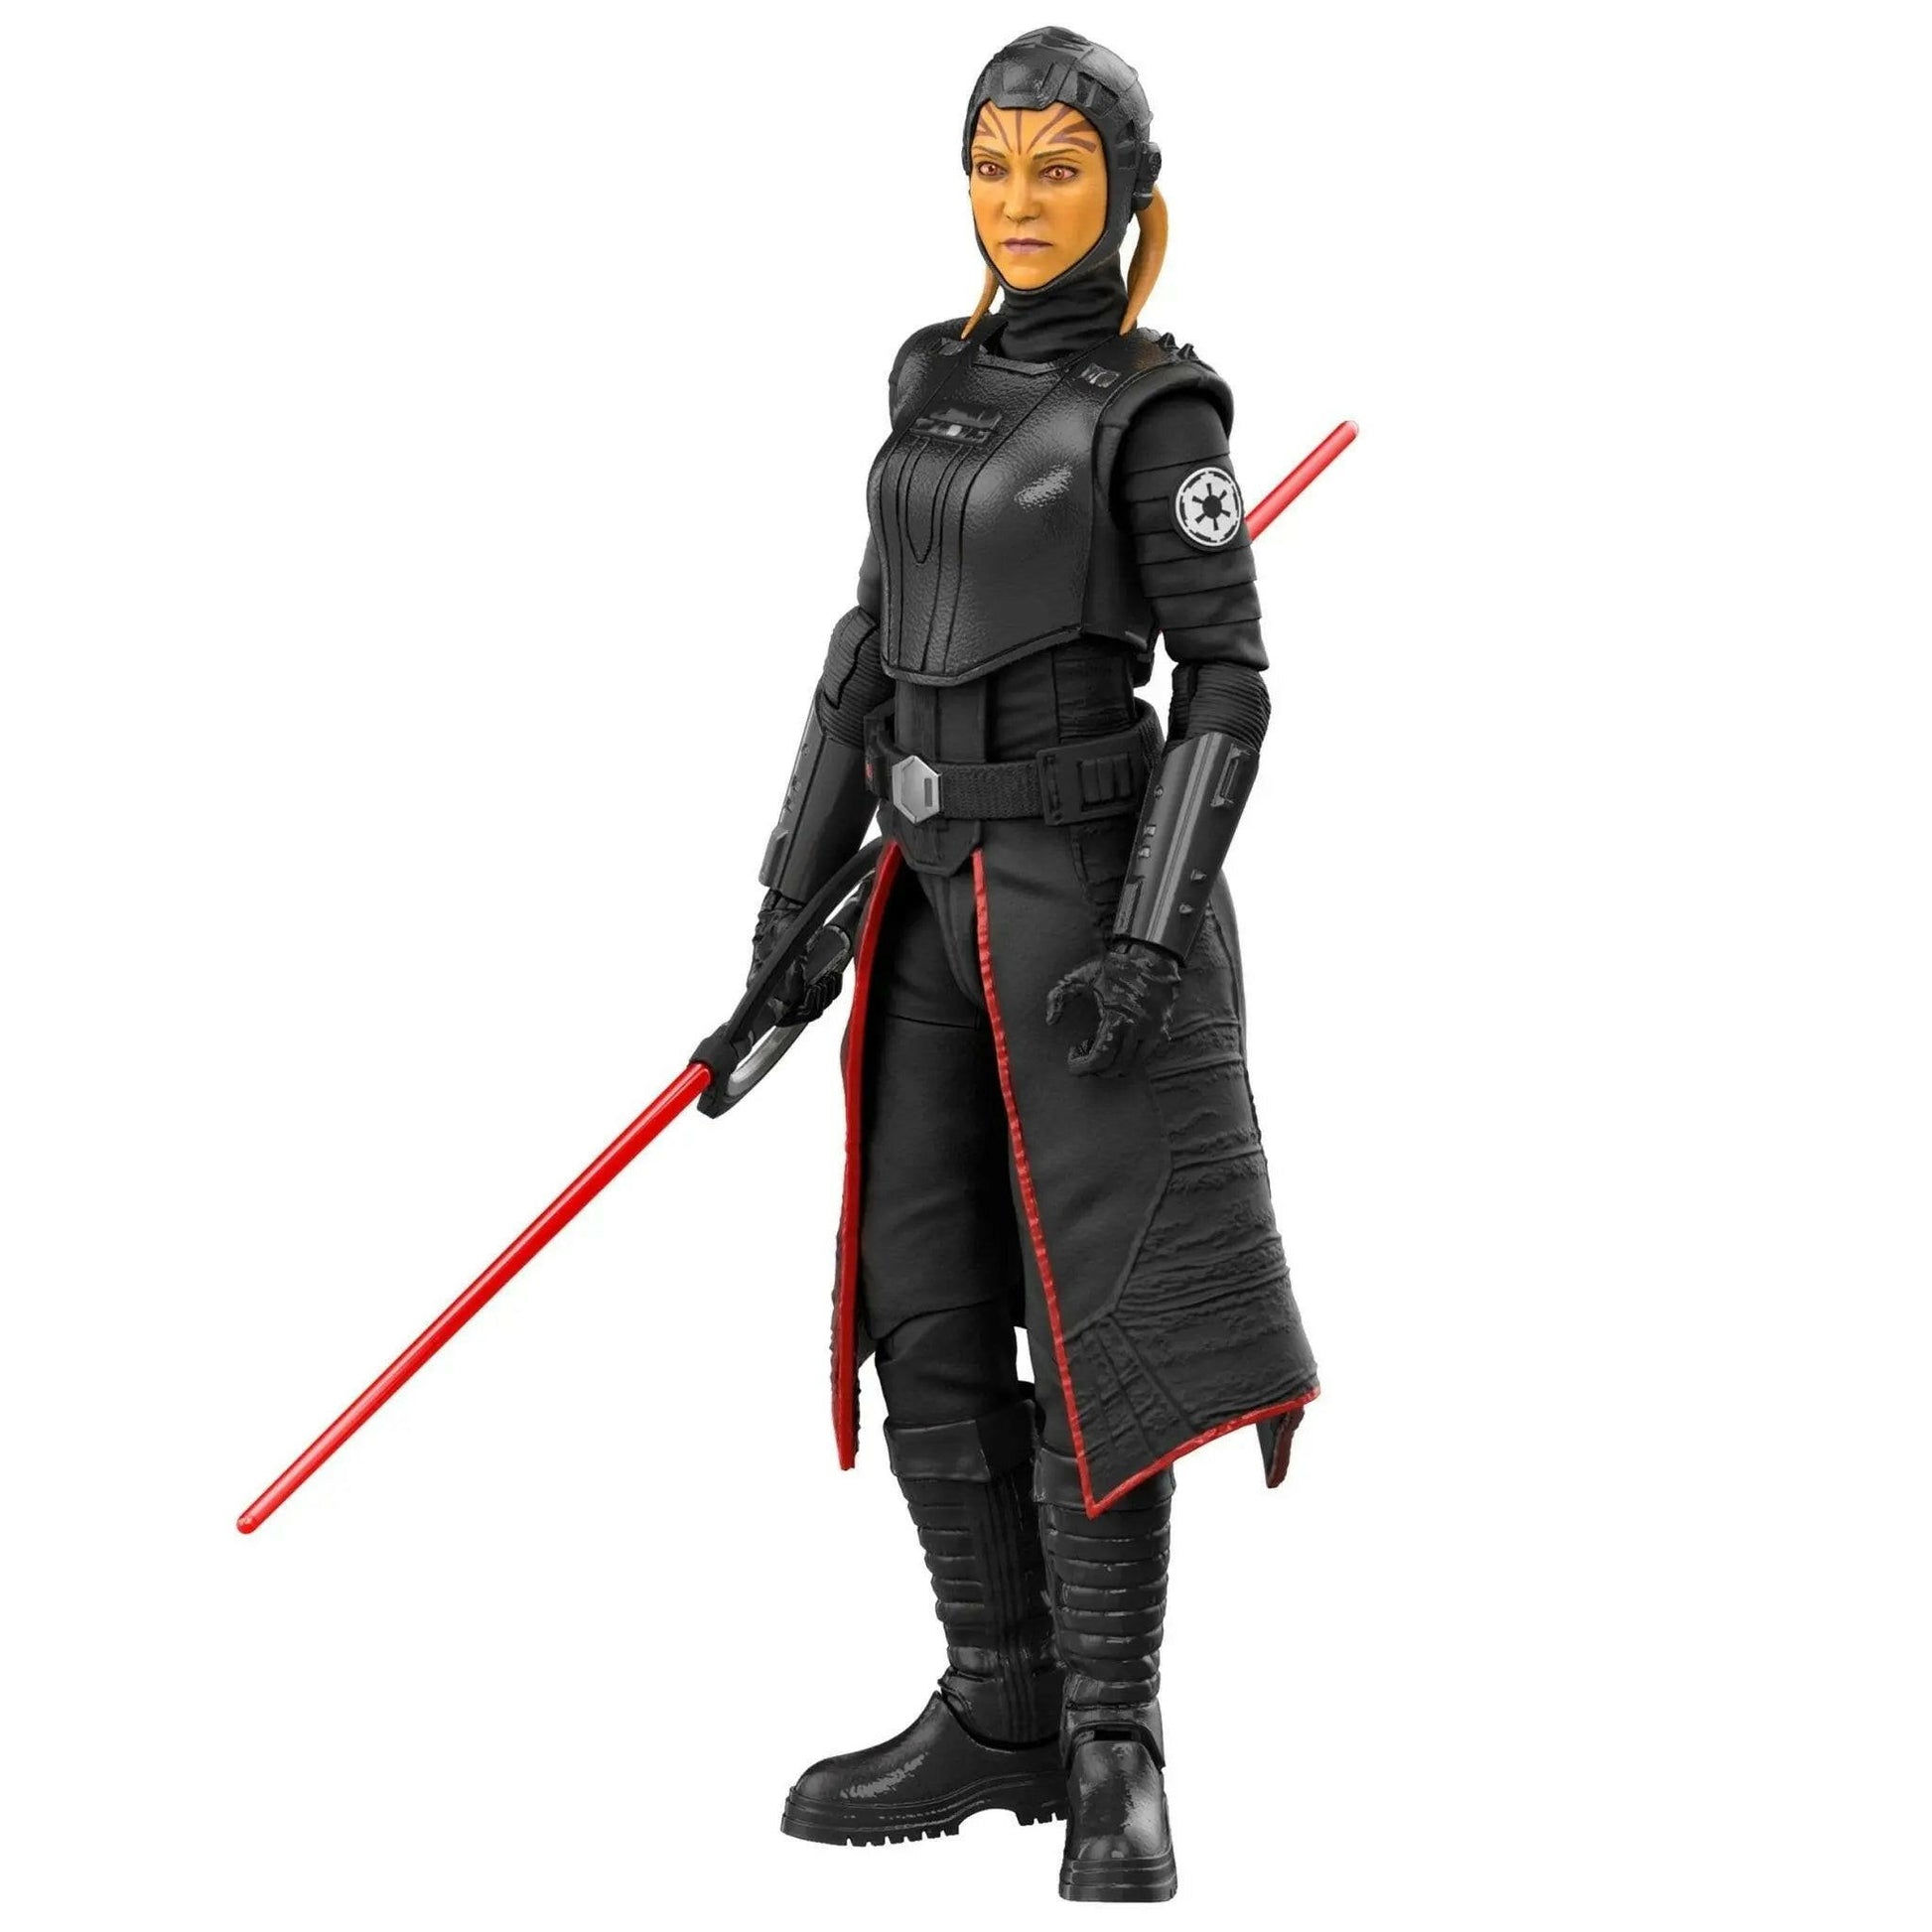 Star Wars Black Series Obi-Wan Kenobi Actionfigur Inquisitor (Fourth Sister) 15cm - Toy-Storage